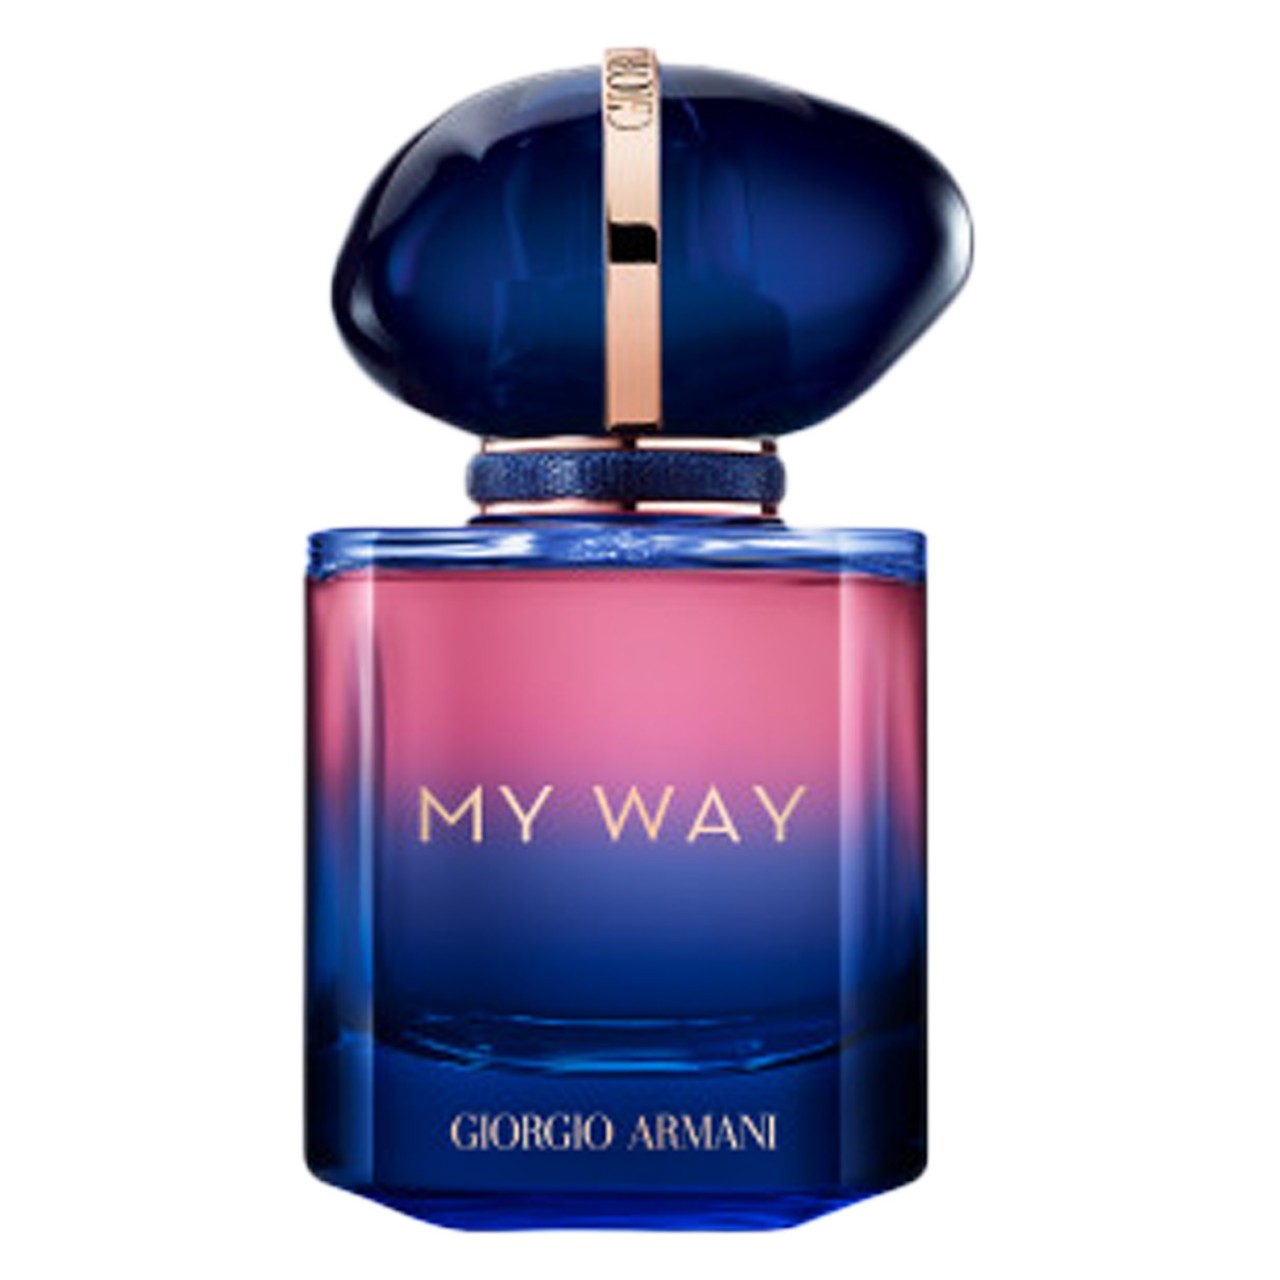 MY WAY - Parfum von Giorgio Armani